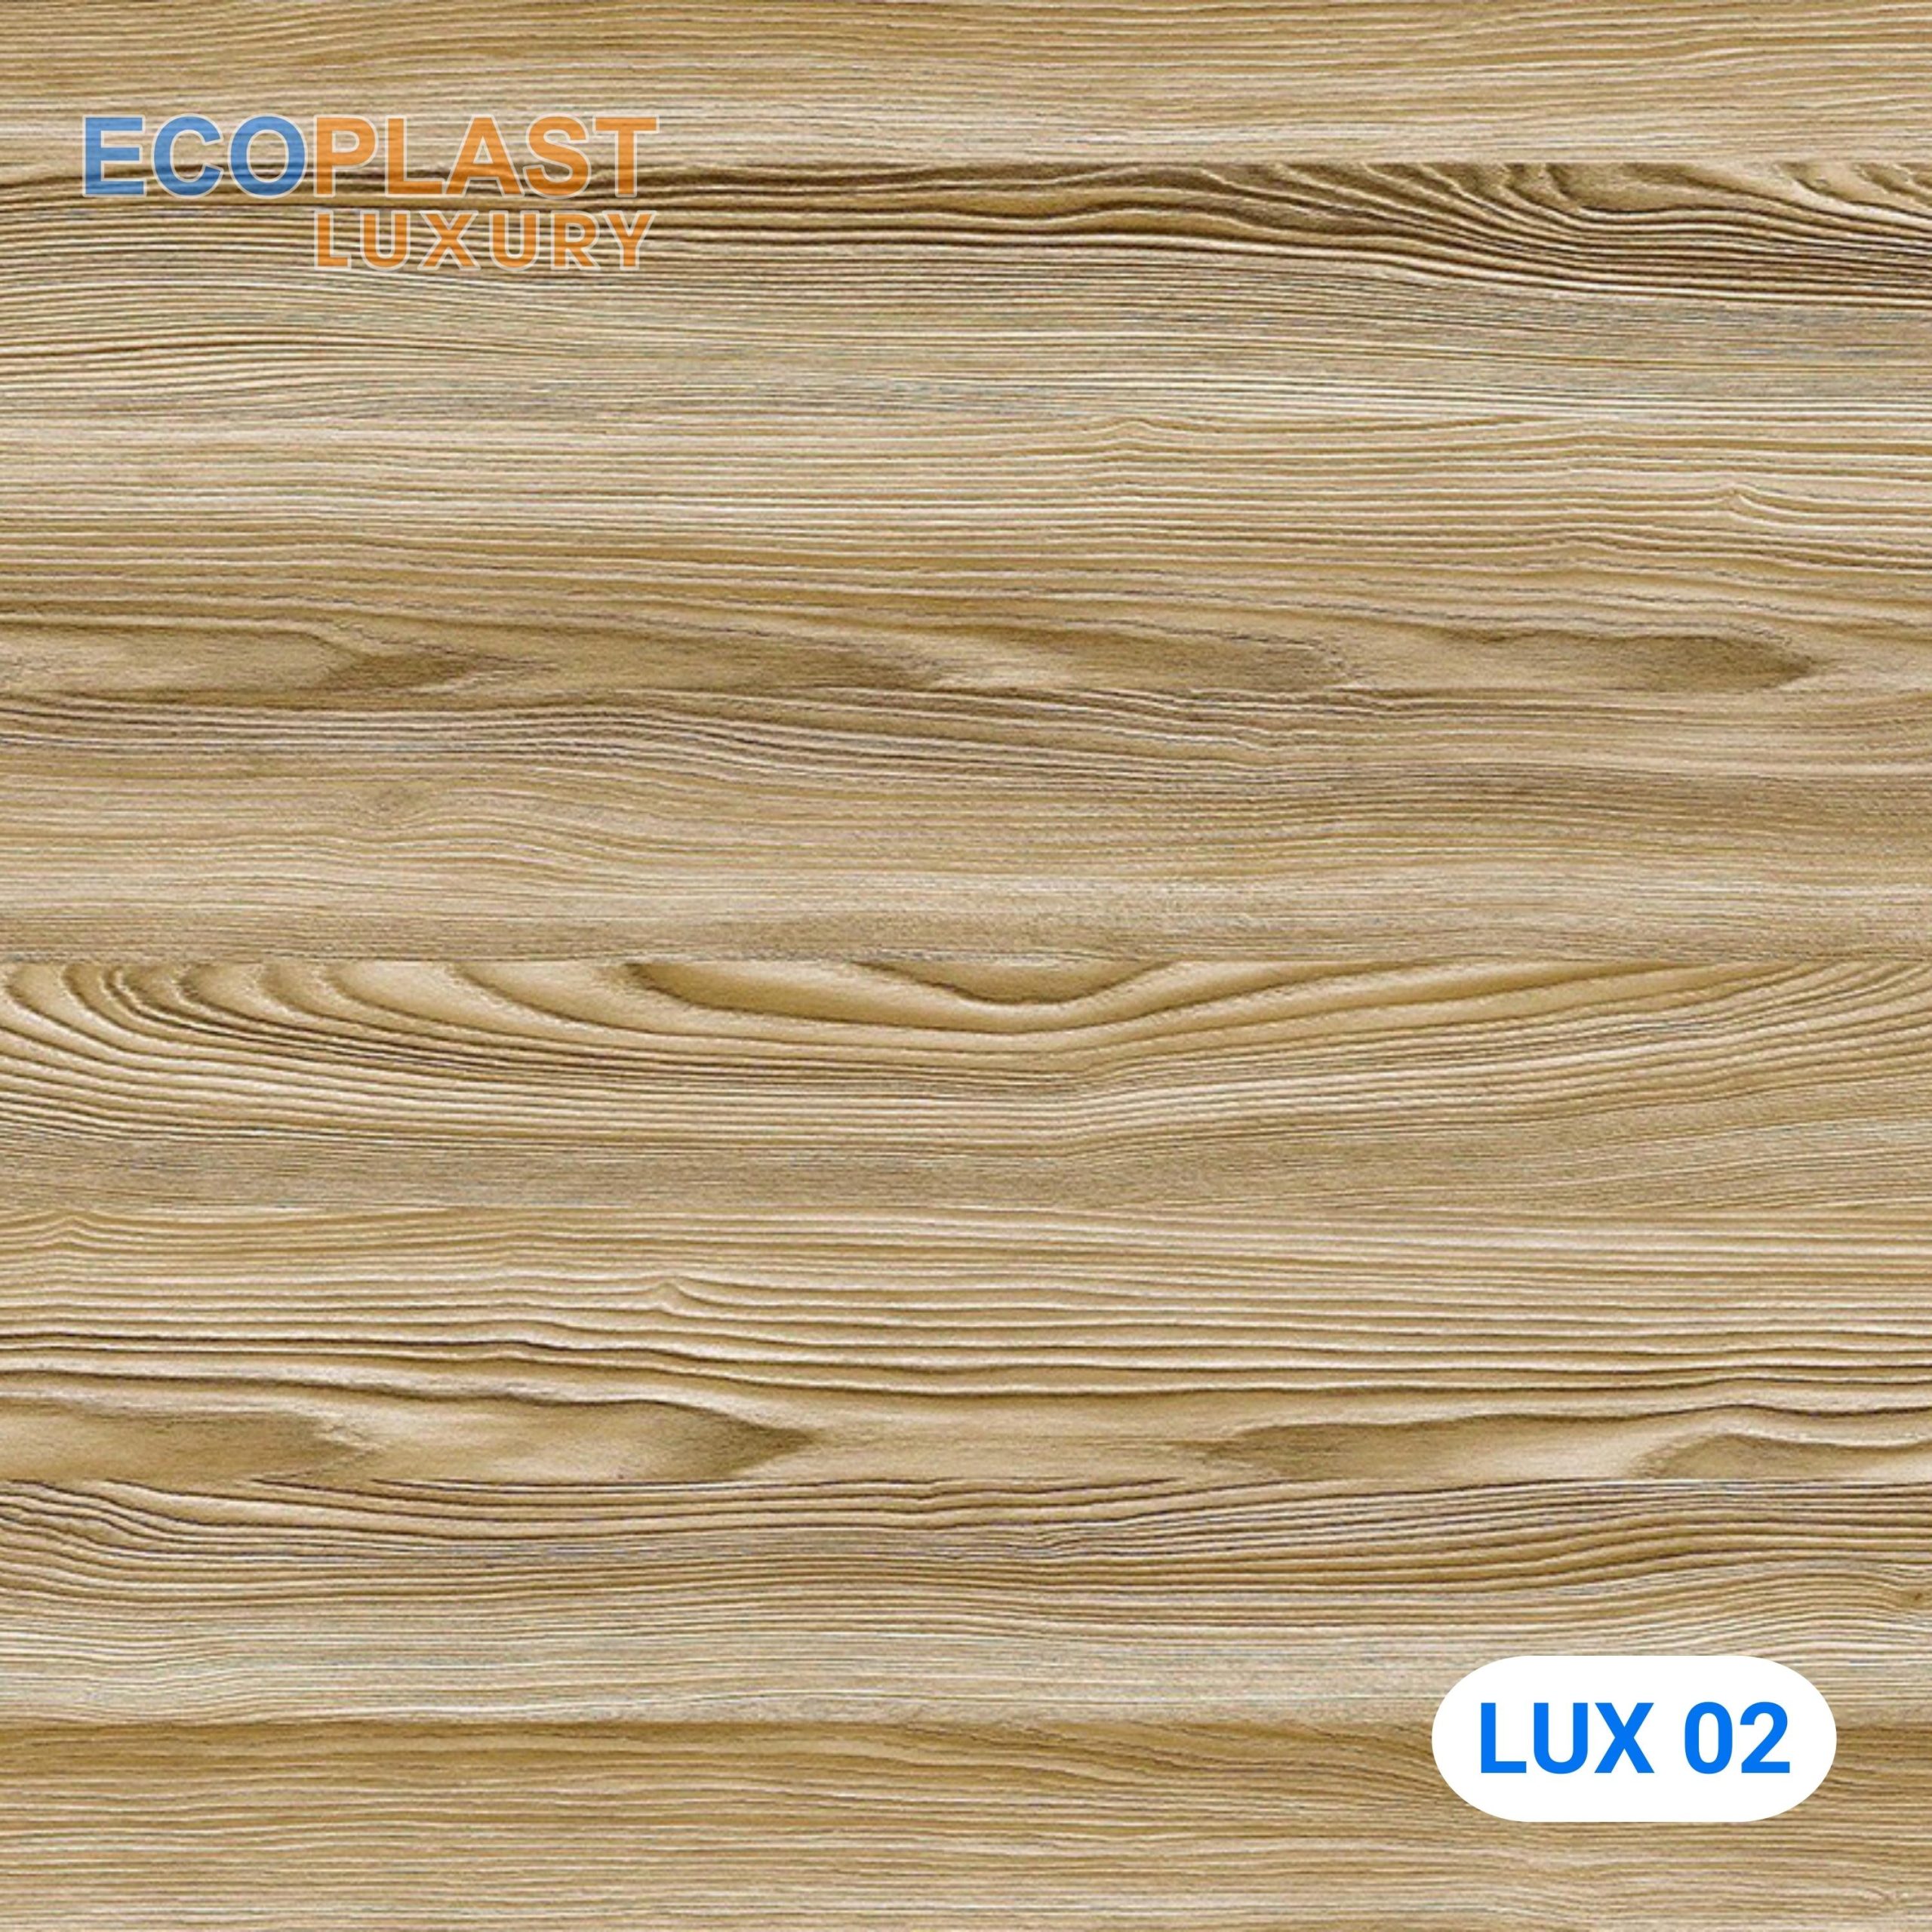 Mã màu tấm nhựa nội thất Ecoplast Lux 02